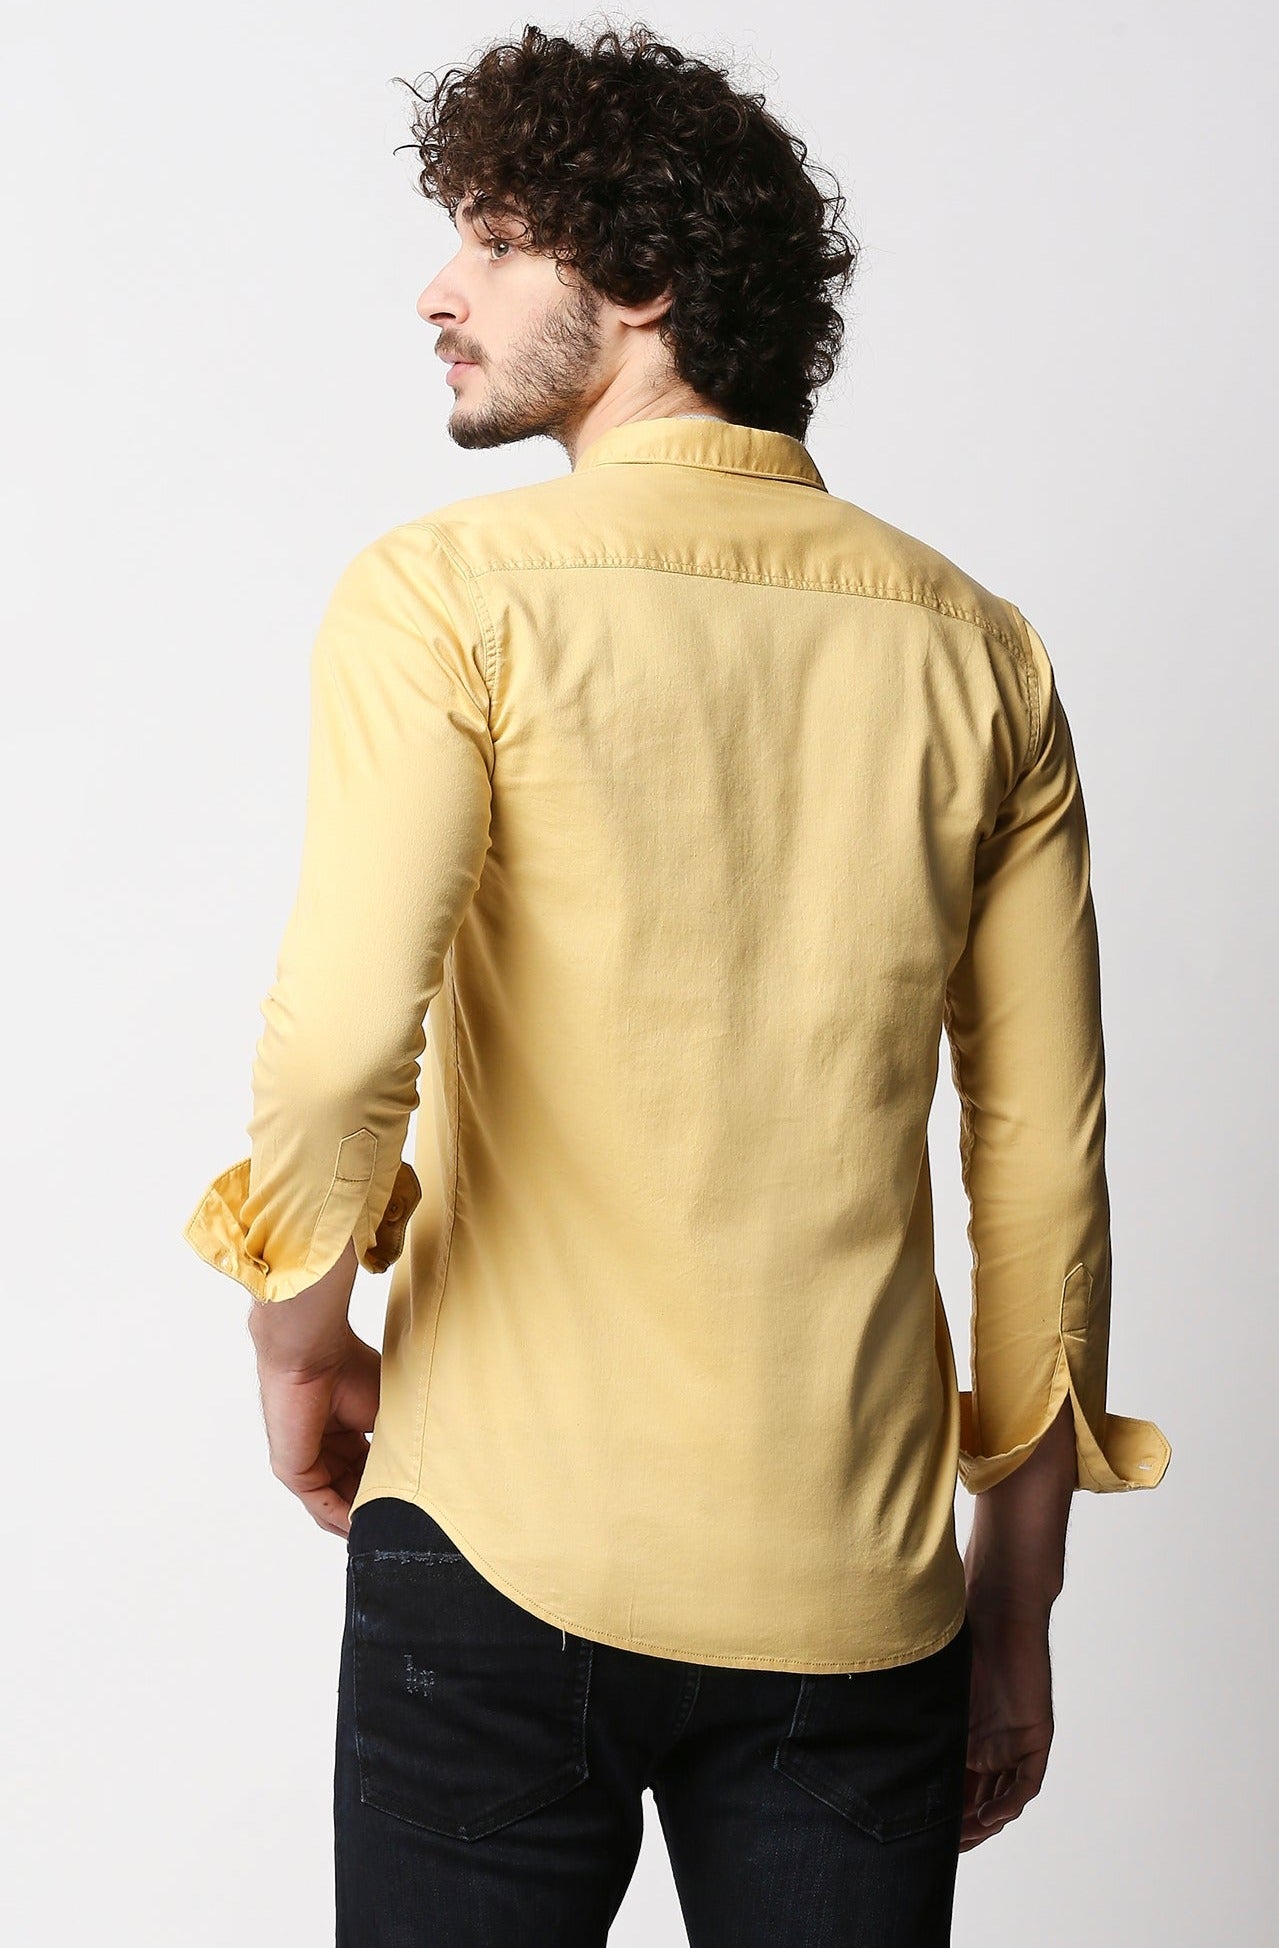 Fostino Yellow Double Pocket Full Sleeves Casual Shirt - Fostino - Shirts